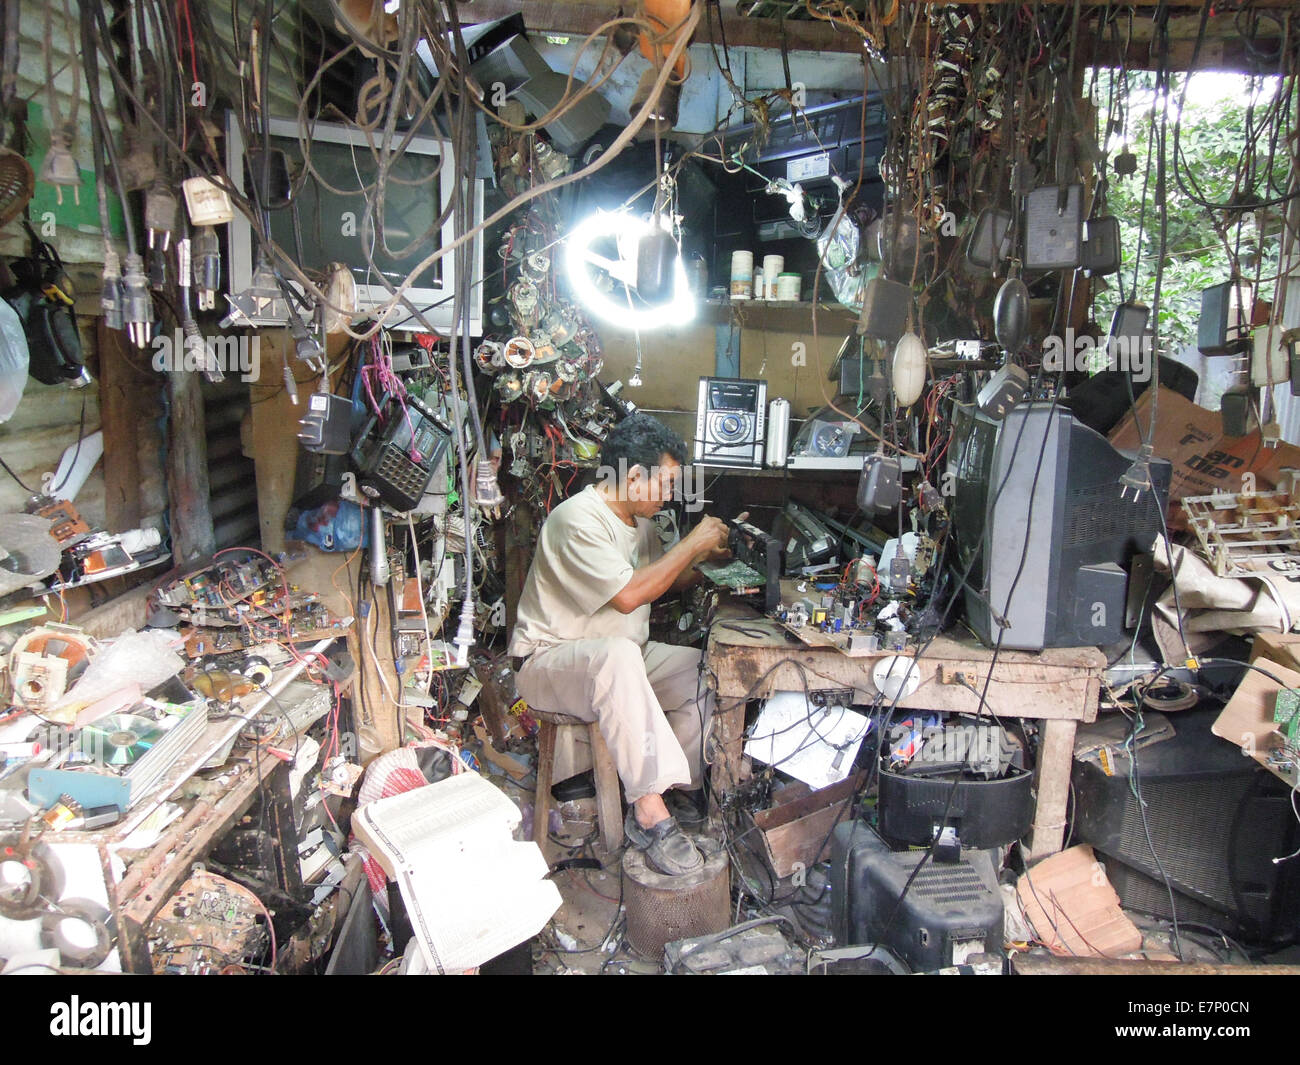 Guatemala, Sayaxche, TV, adjust, disorder, electric, wires, electronics, multitude, person, radio, repair, repairman, shop, ster Stock Photo